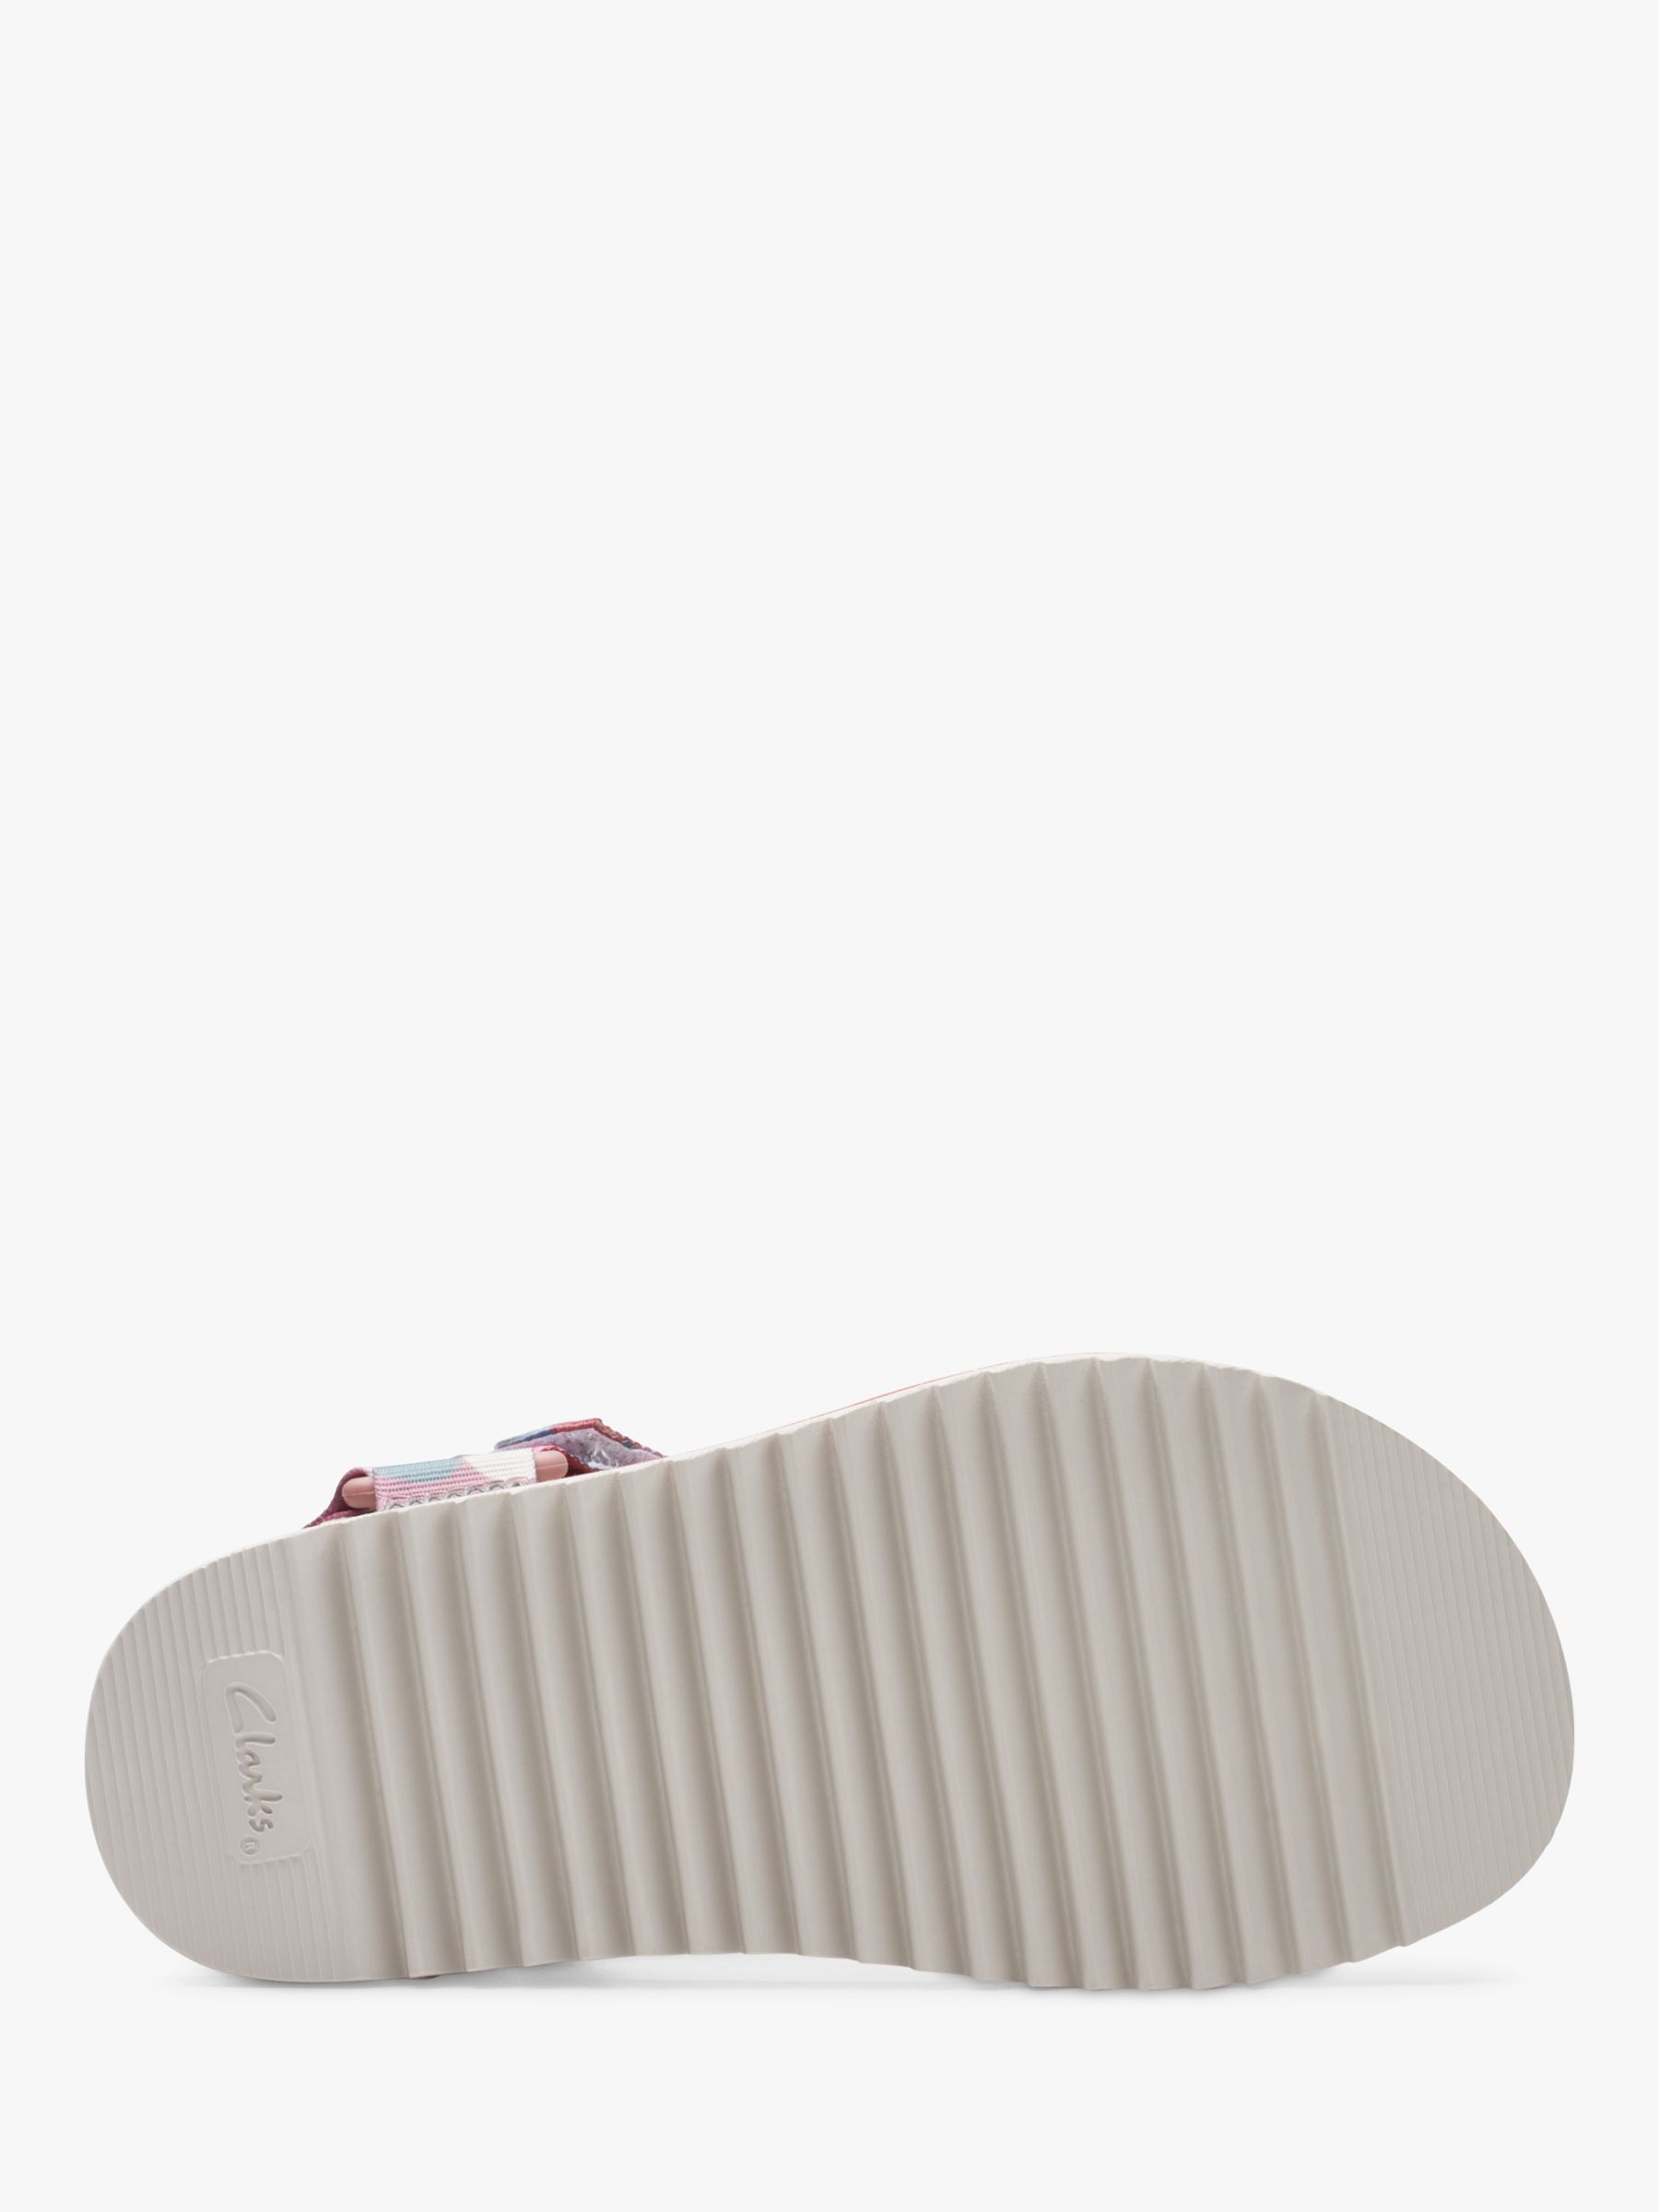 Clarks Kids' Peak Web Water Resistant Sandals, Pink/Multi, 12.5F Jnr